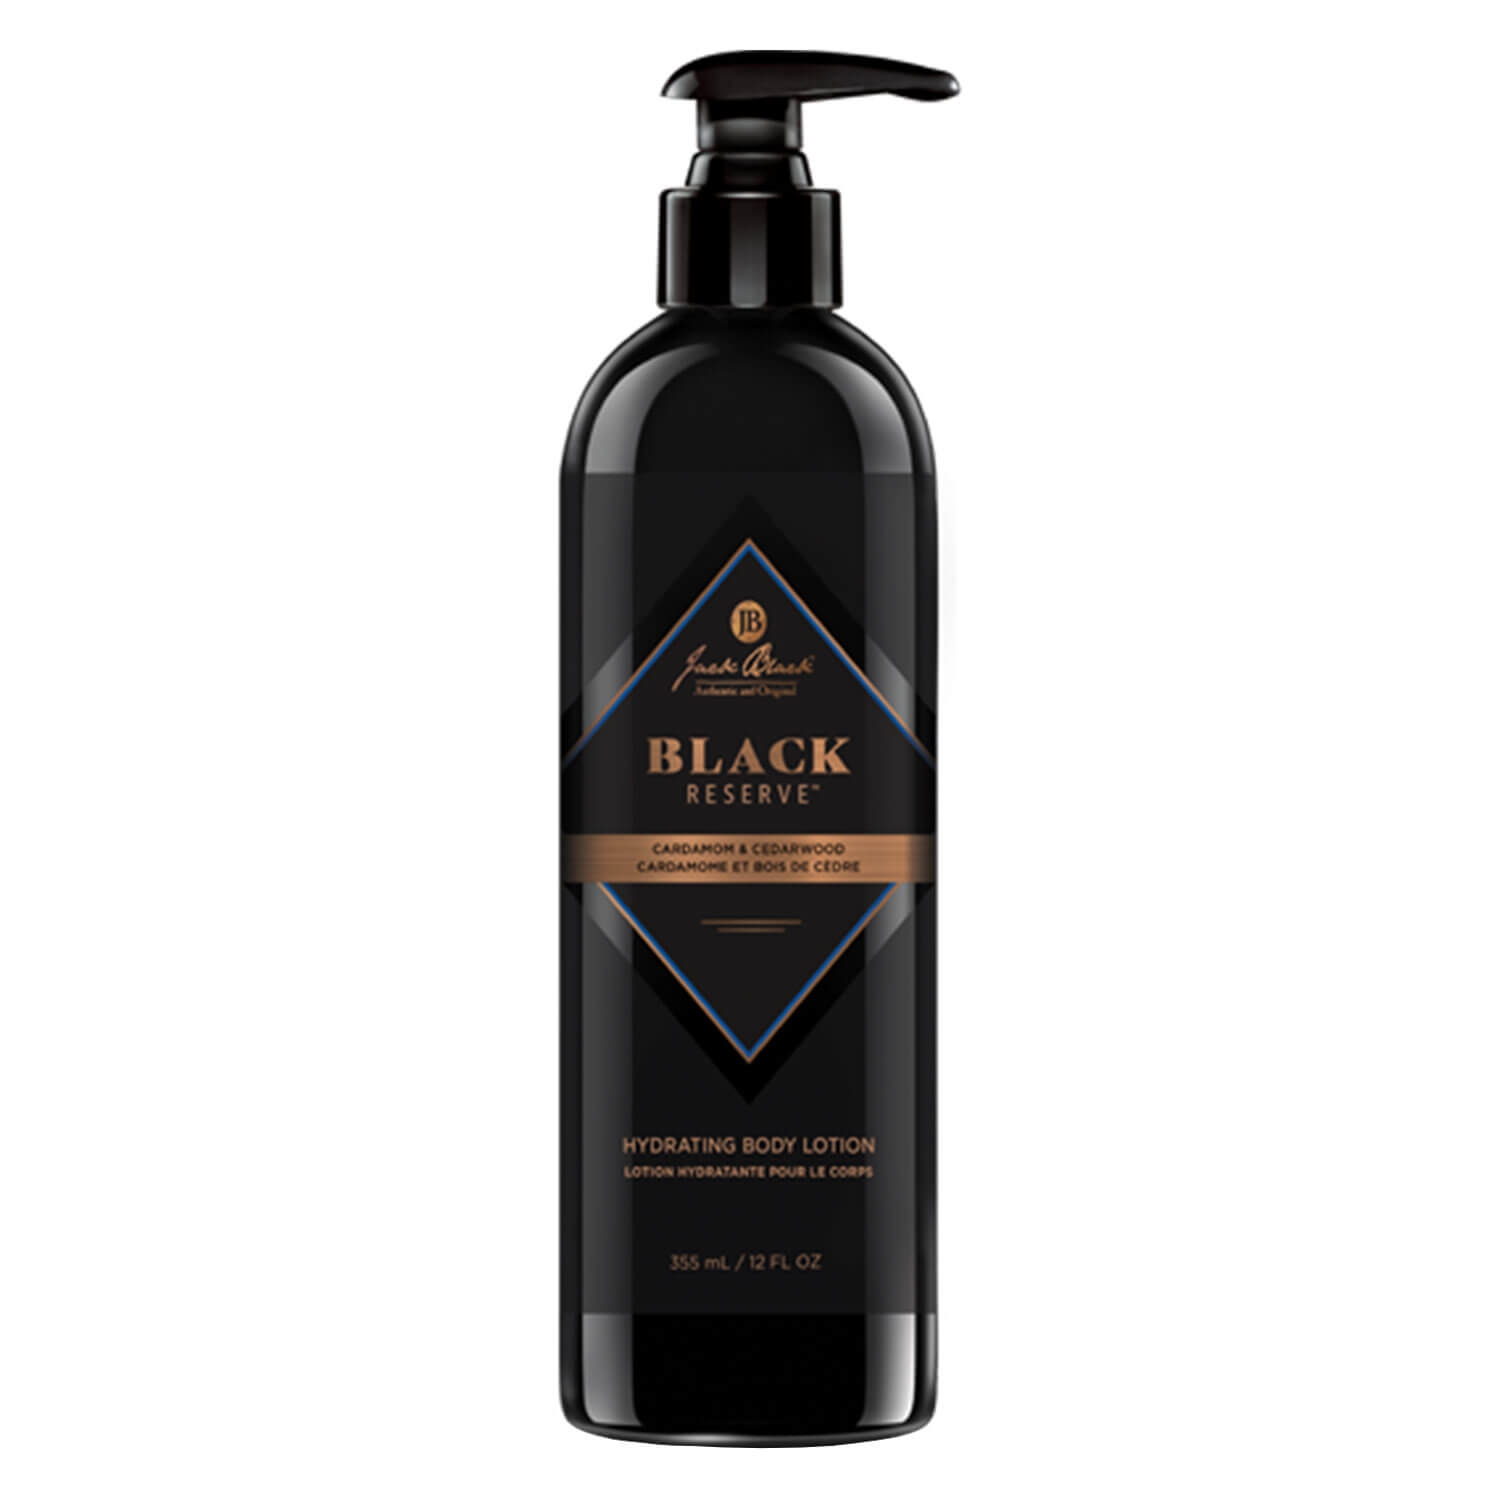 Produktbild von Black Reserve - Hydrating Body Lotion